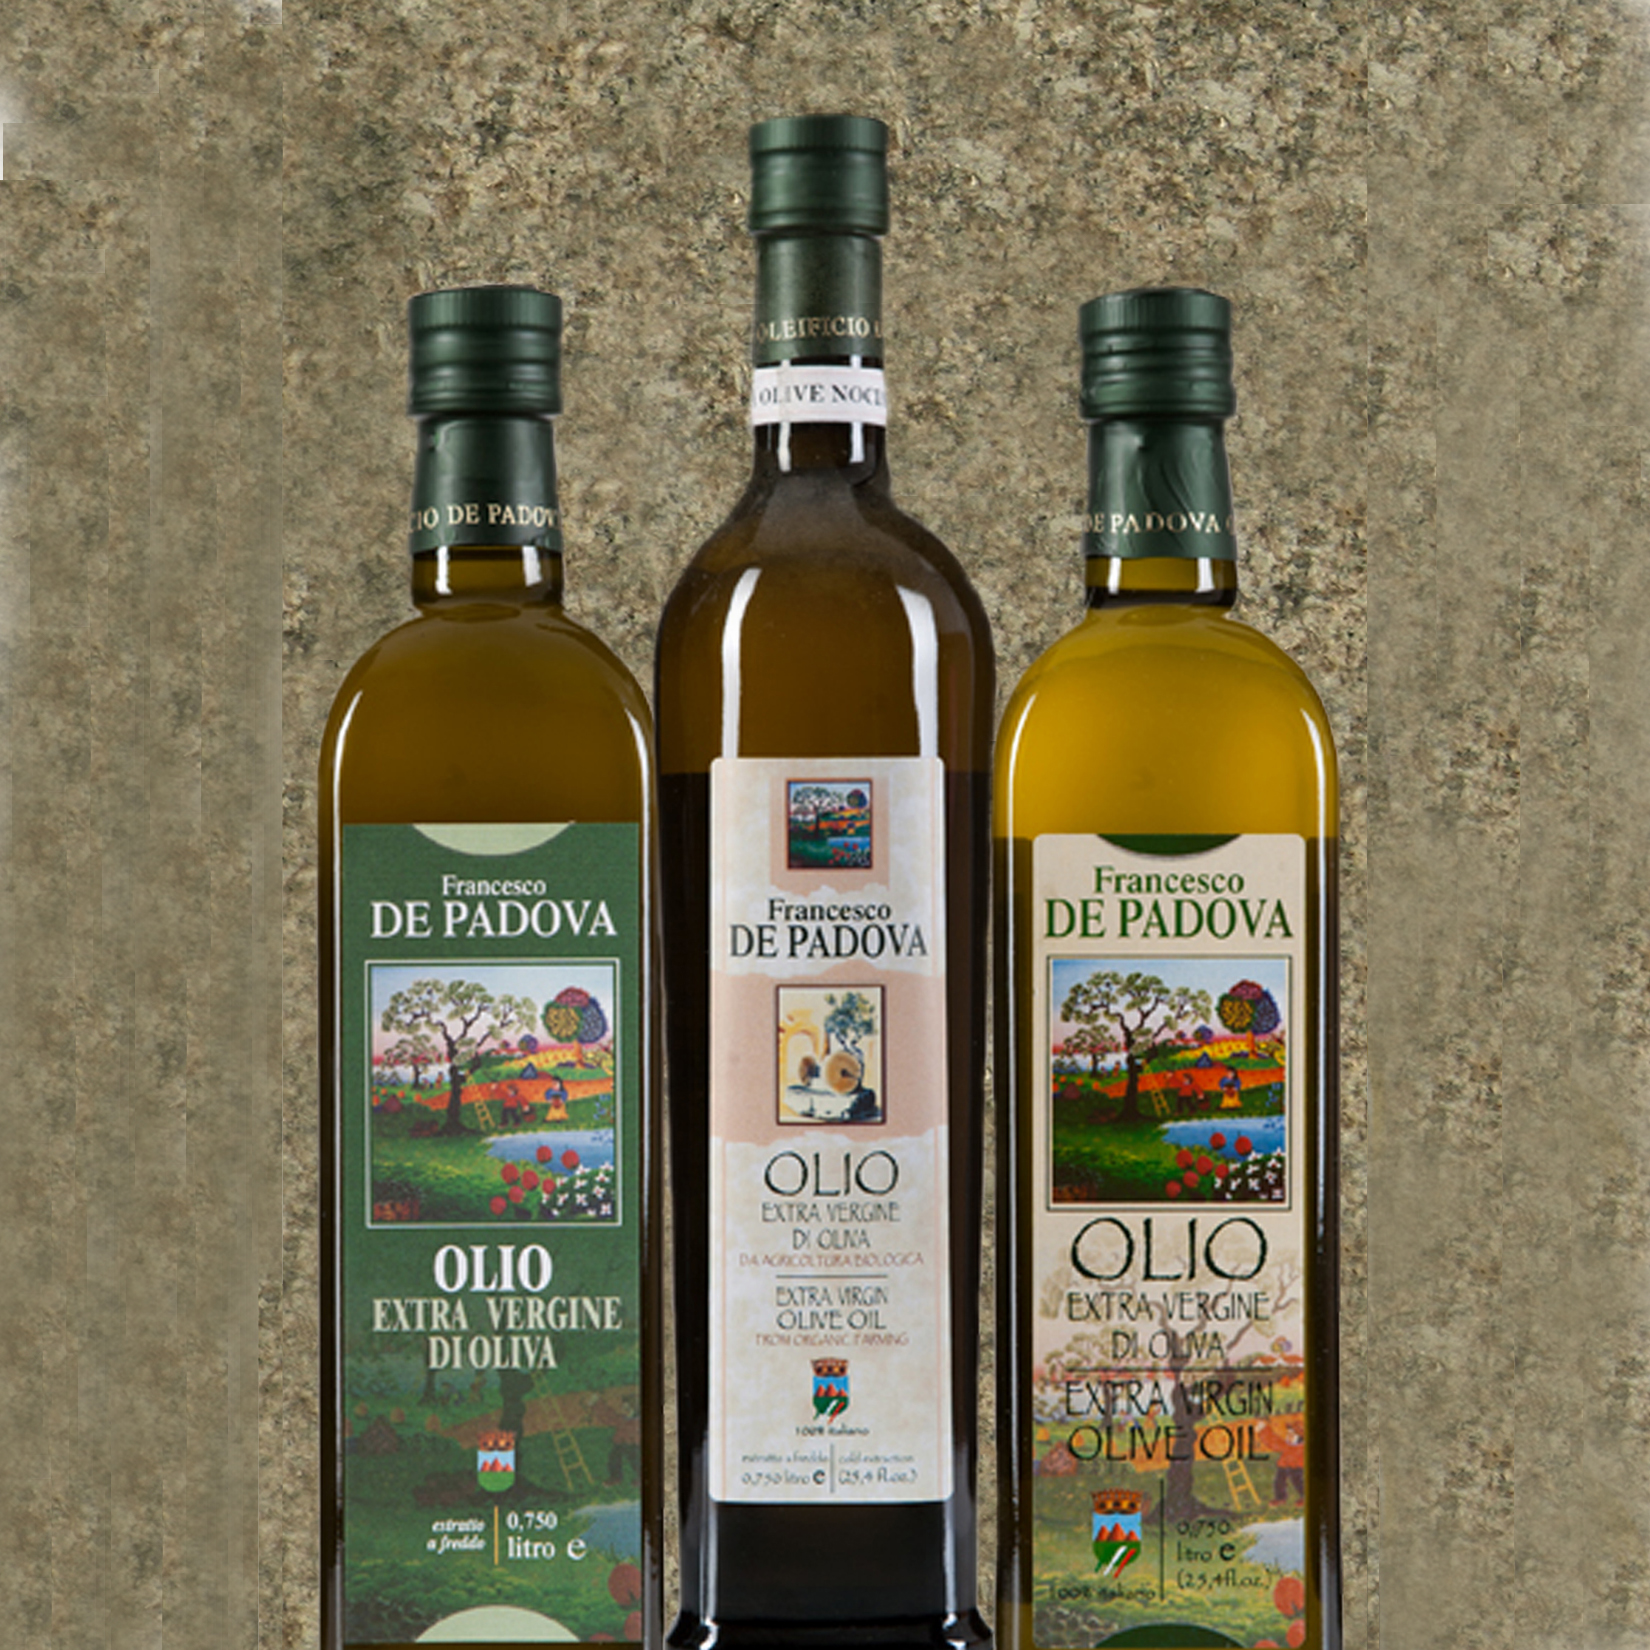 EXTRA VIRGIN OLIVE OIL FROM ORGANIC FARMING Cold Extraction - Francesco De Padova , Cantina Bosco, 100% Italy, condiments